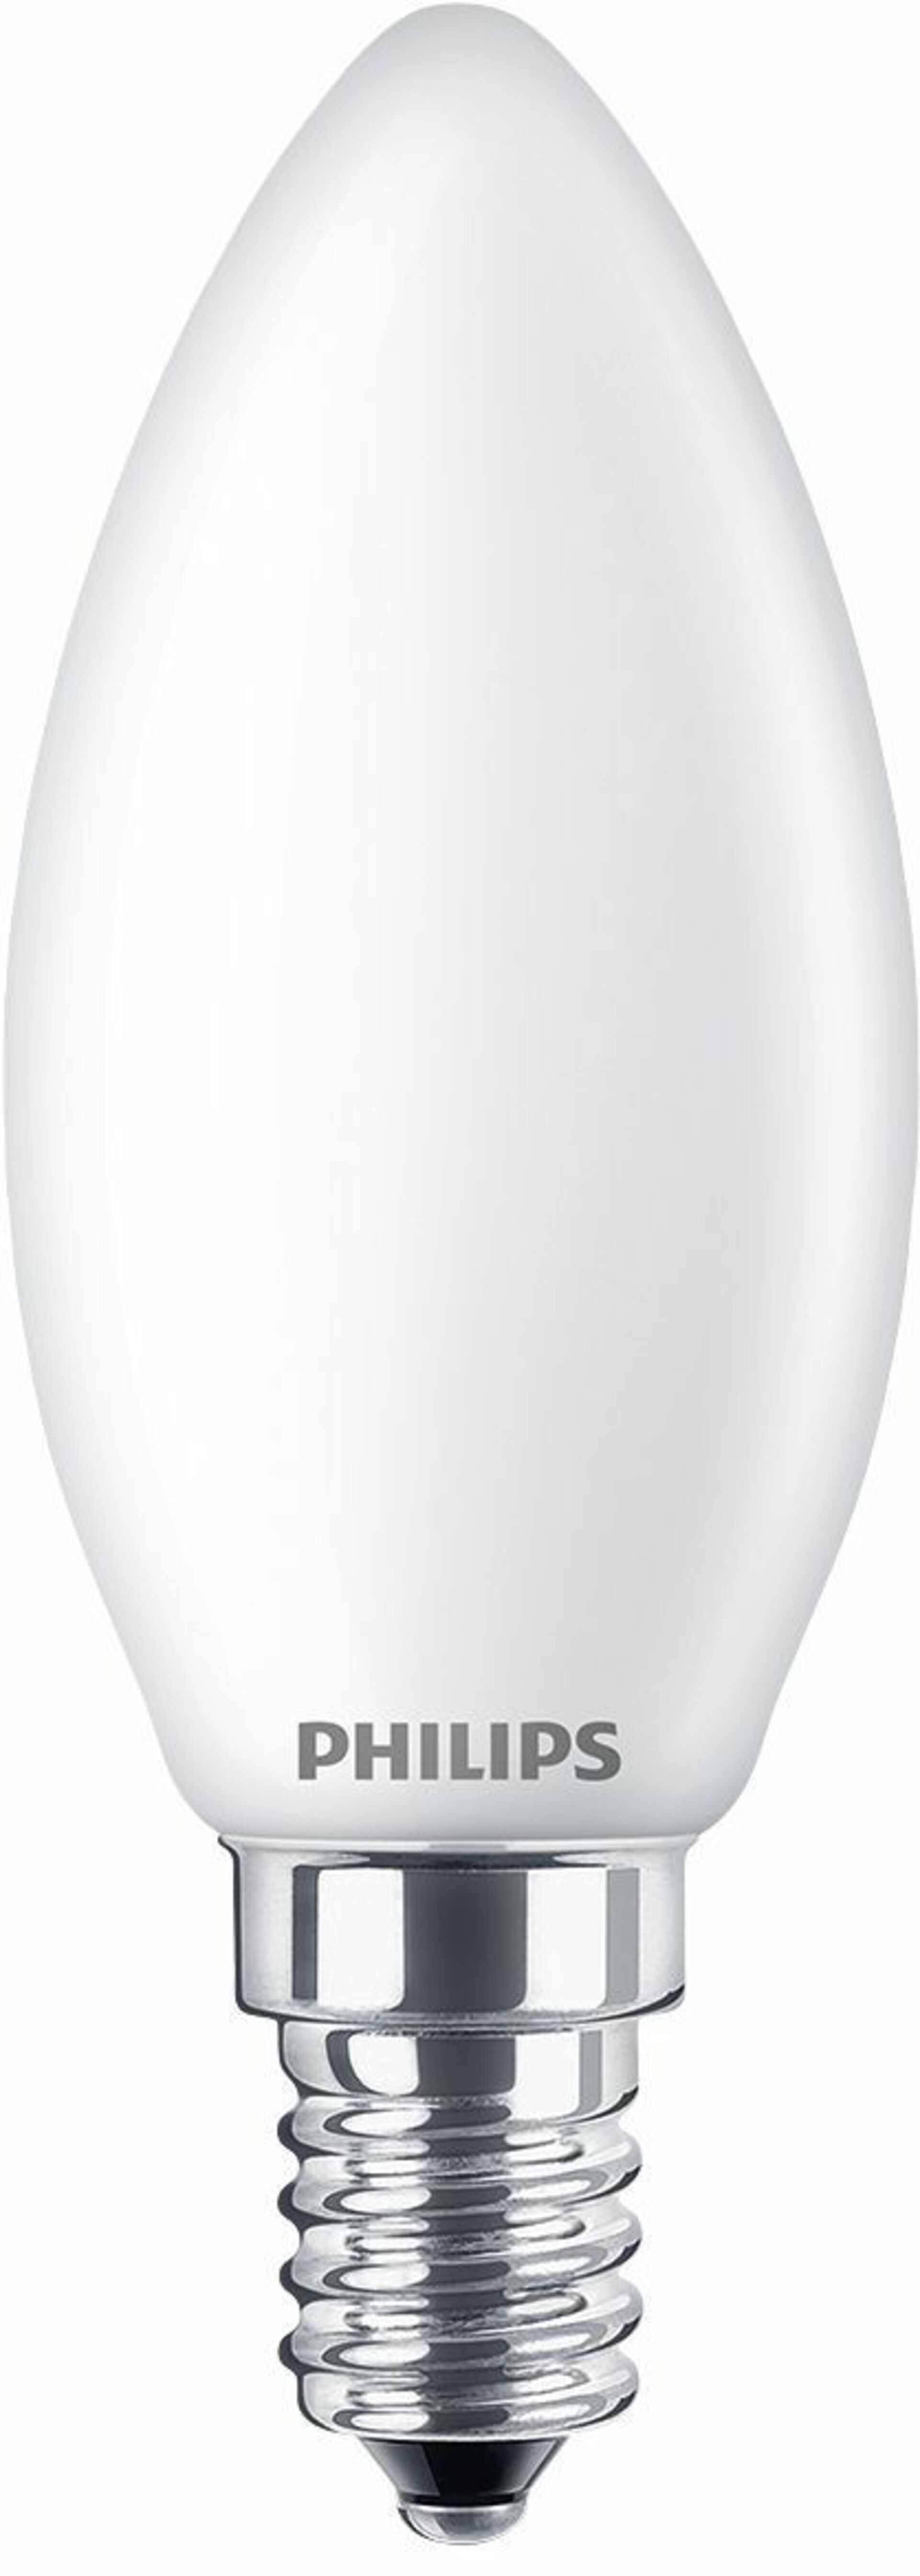 Philips CorePro LEDCandle ND 6.5-60W B35 E14 827 FROSTED GLASS